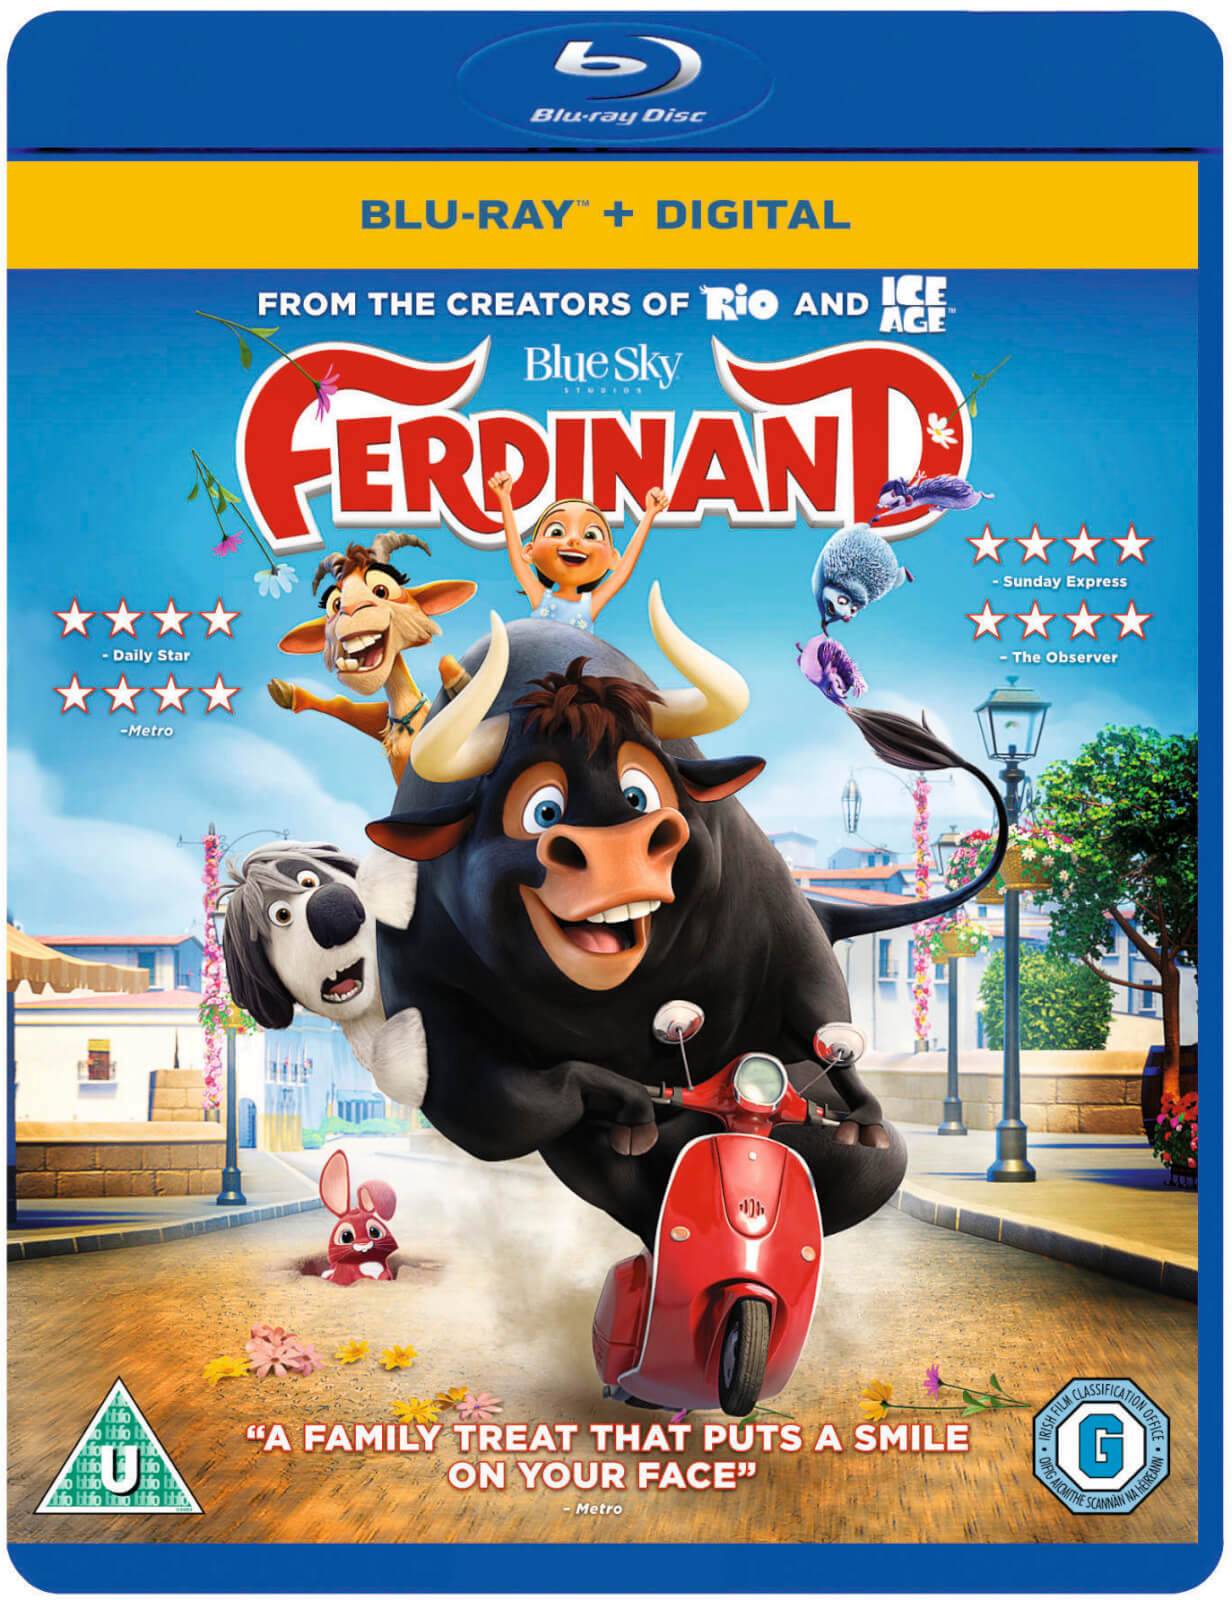 Ferdinand The Bull (English) movie mp4 free